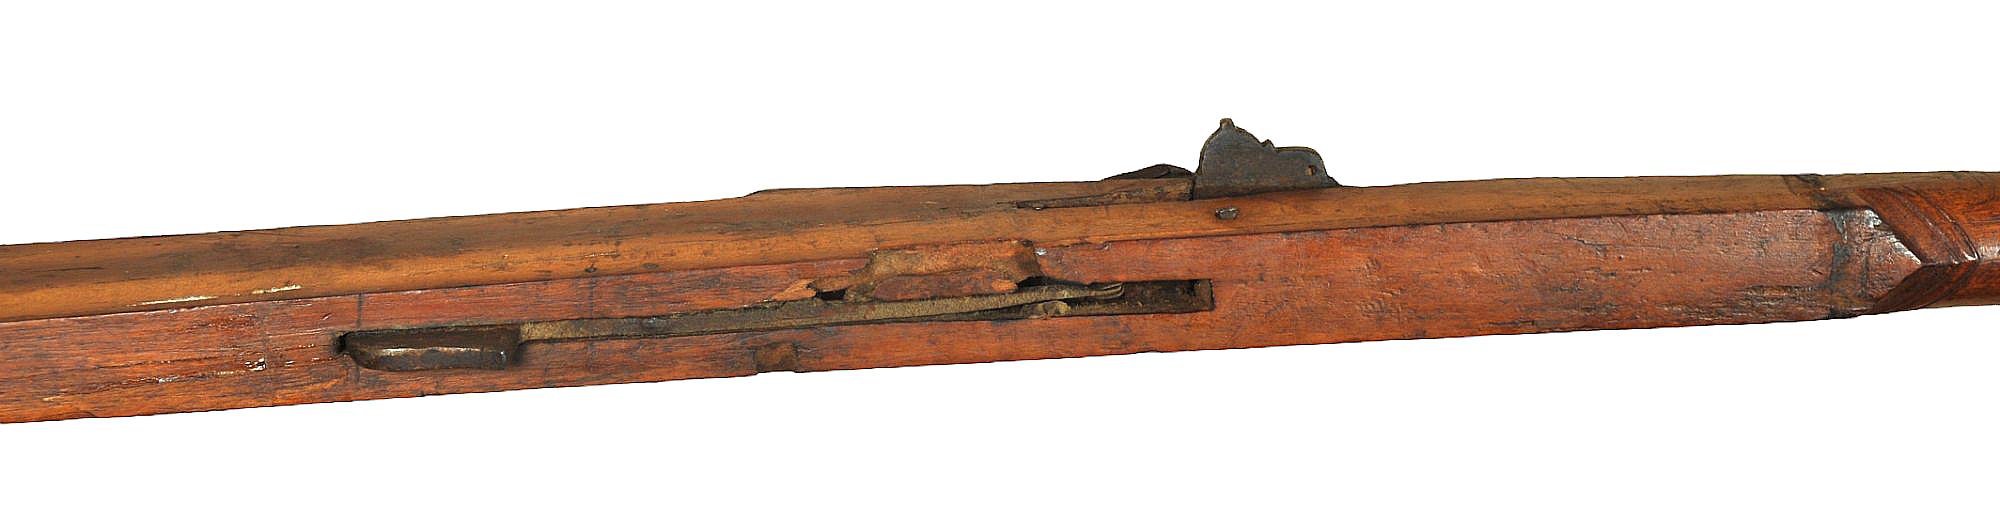 Rare Indo-Persian 19th Century 1" Matchlock Wall Gun (KDW1)